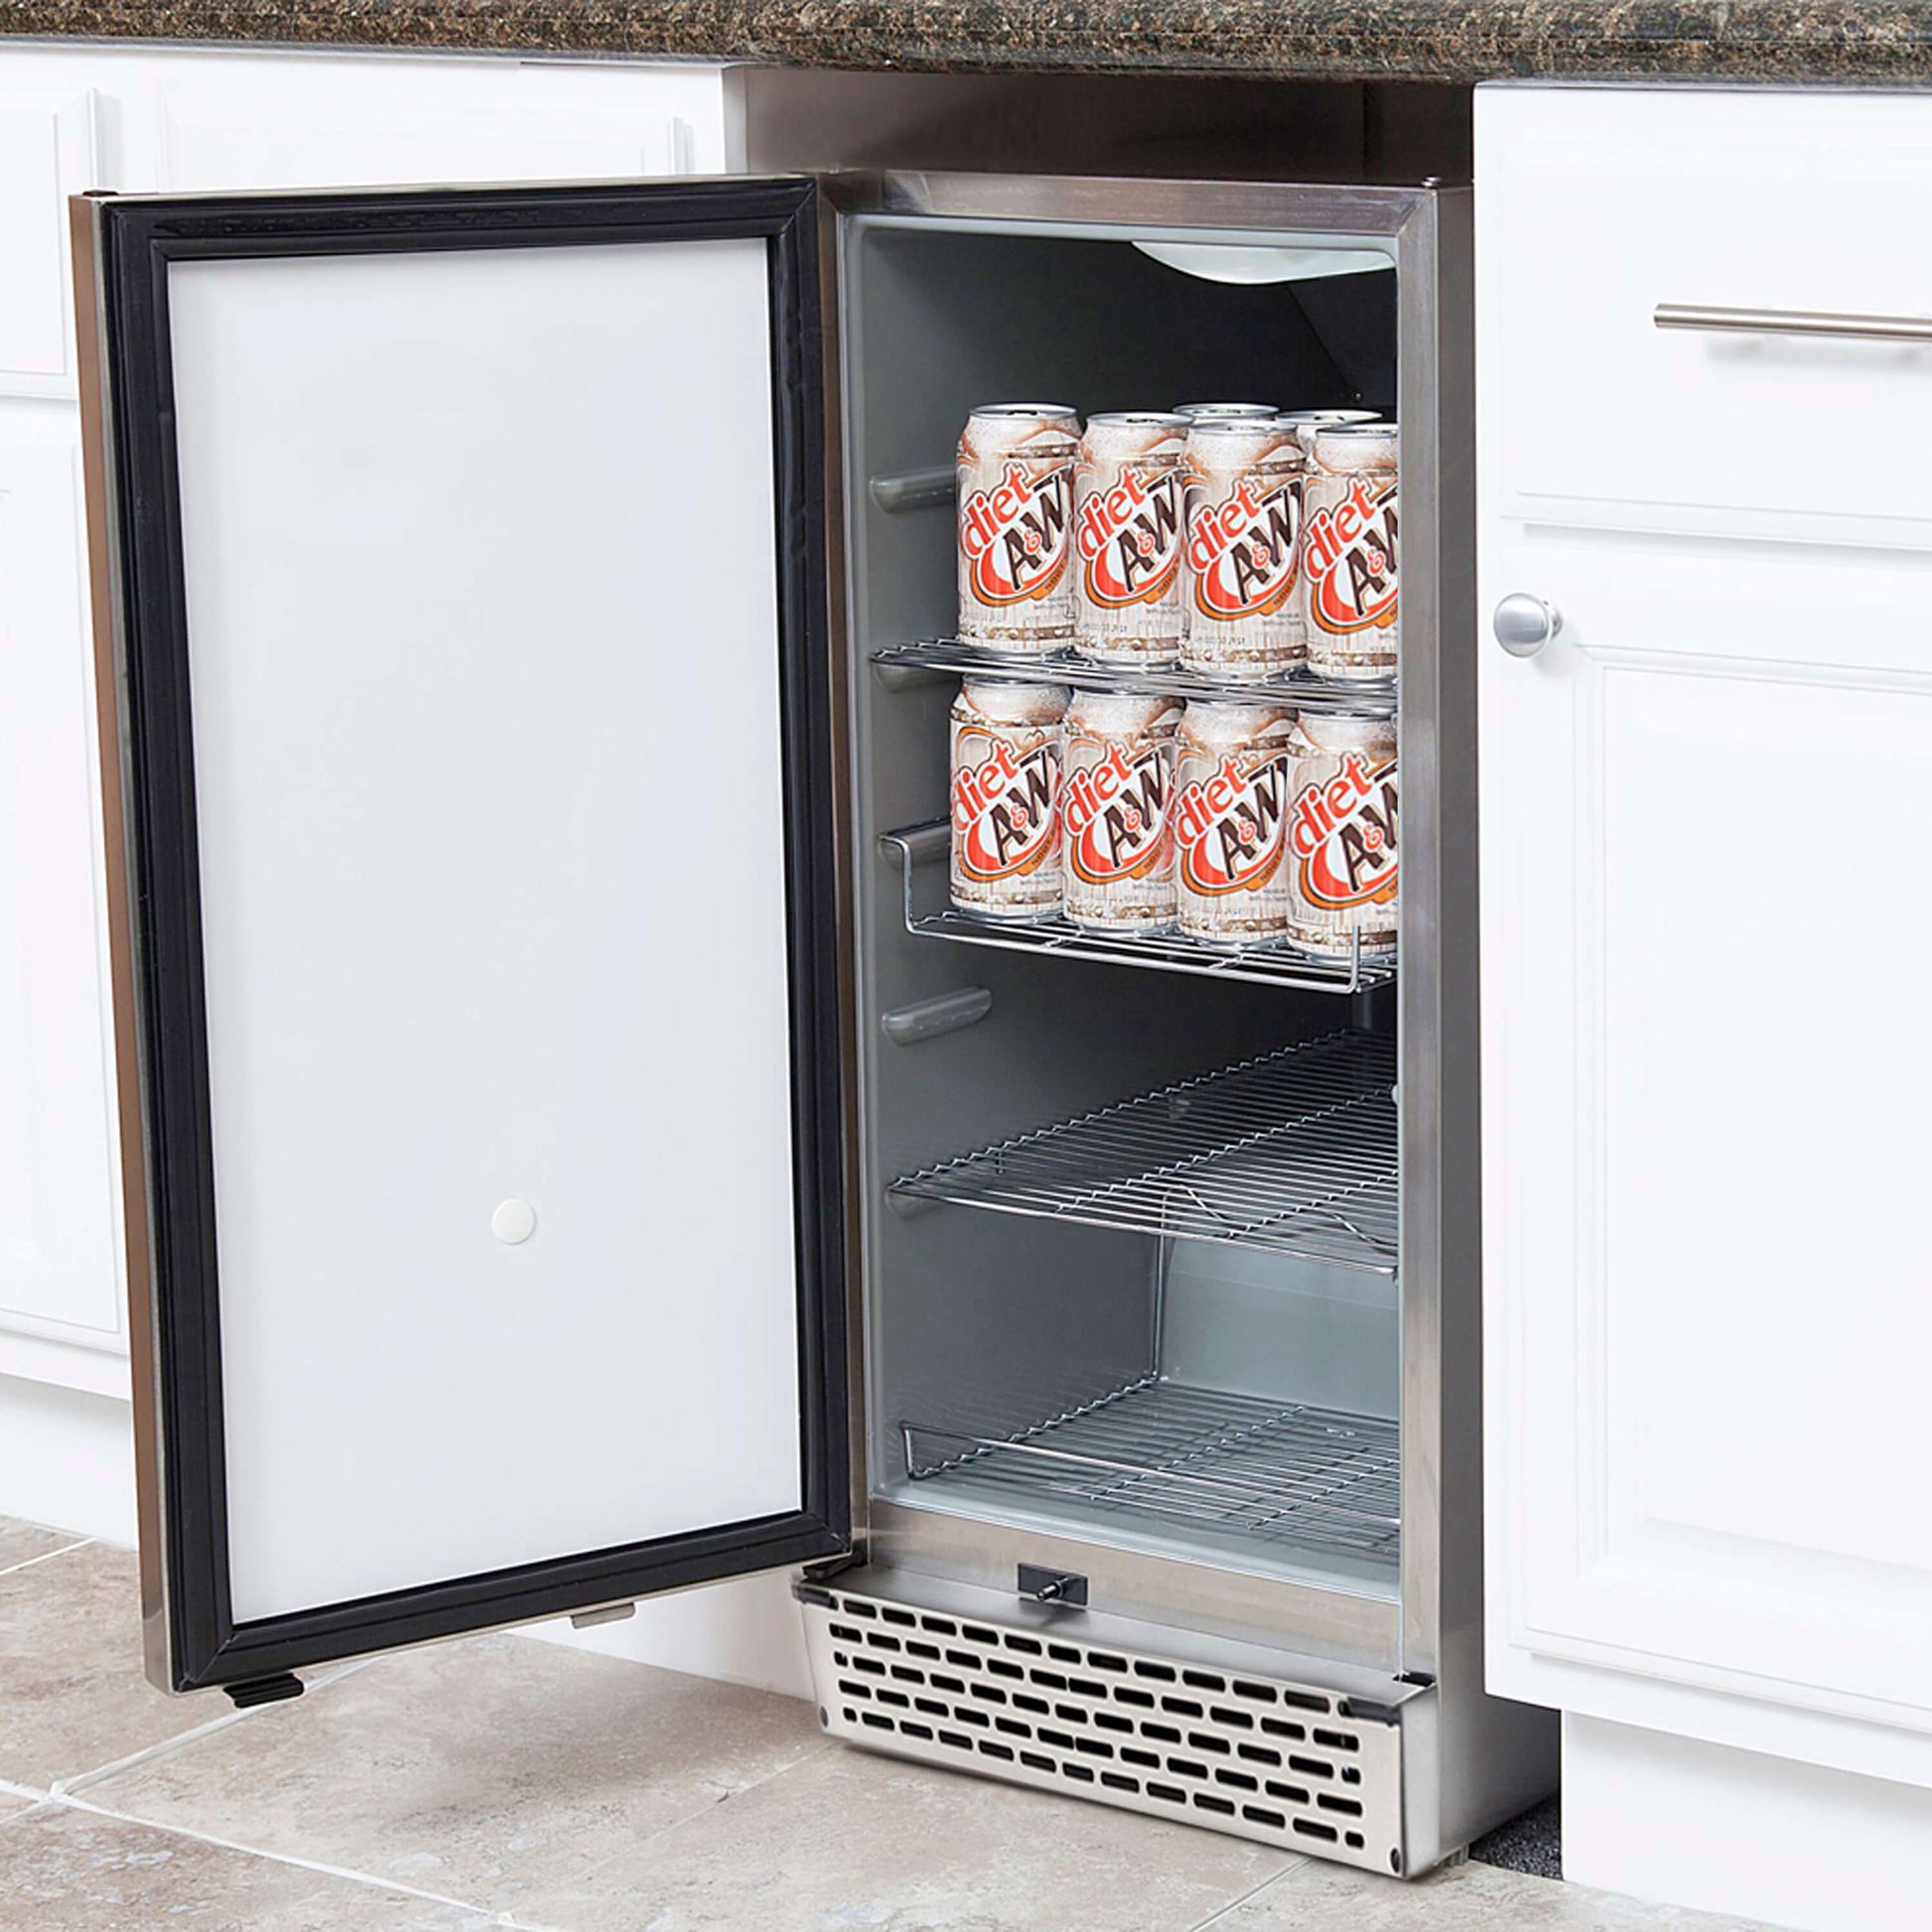 Whynter BOR-326FS Energy Star Stainless Steel 3.2 cu. ft. Indoor/Outdoor Beverage Refrigerator